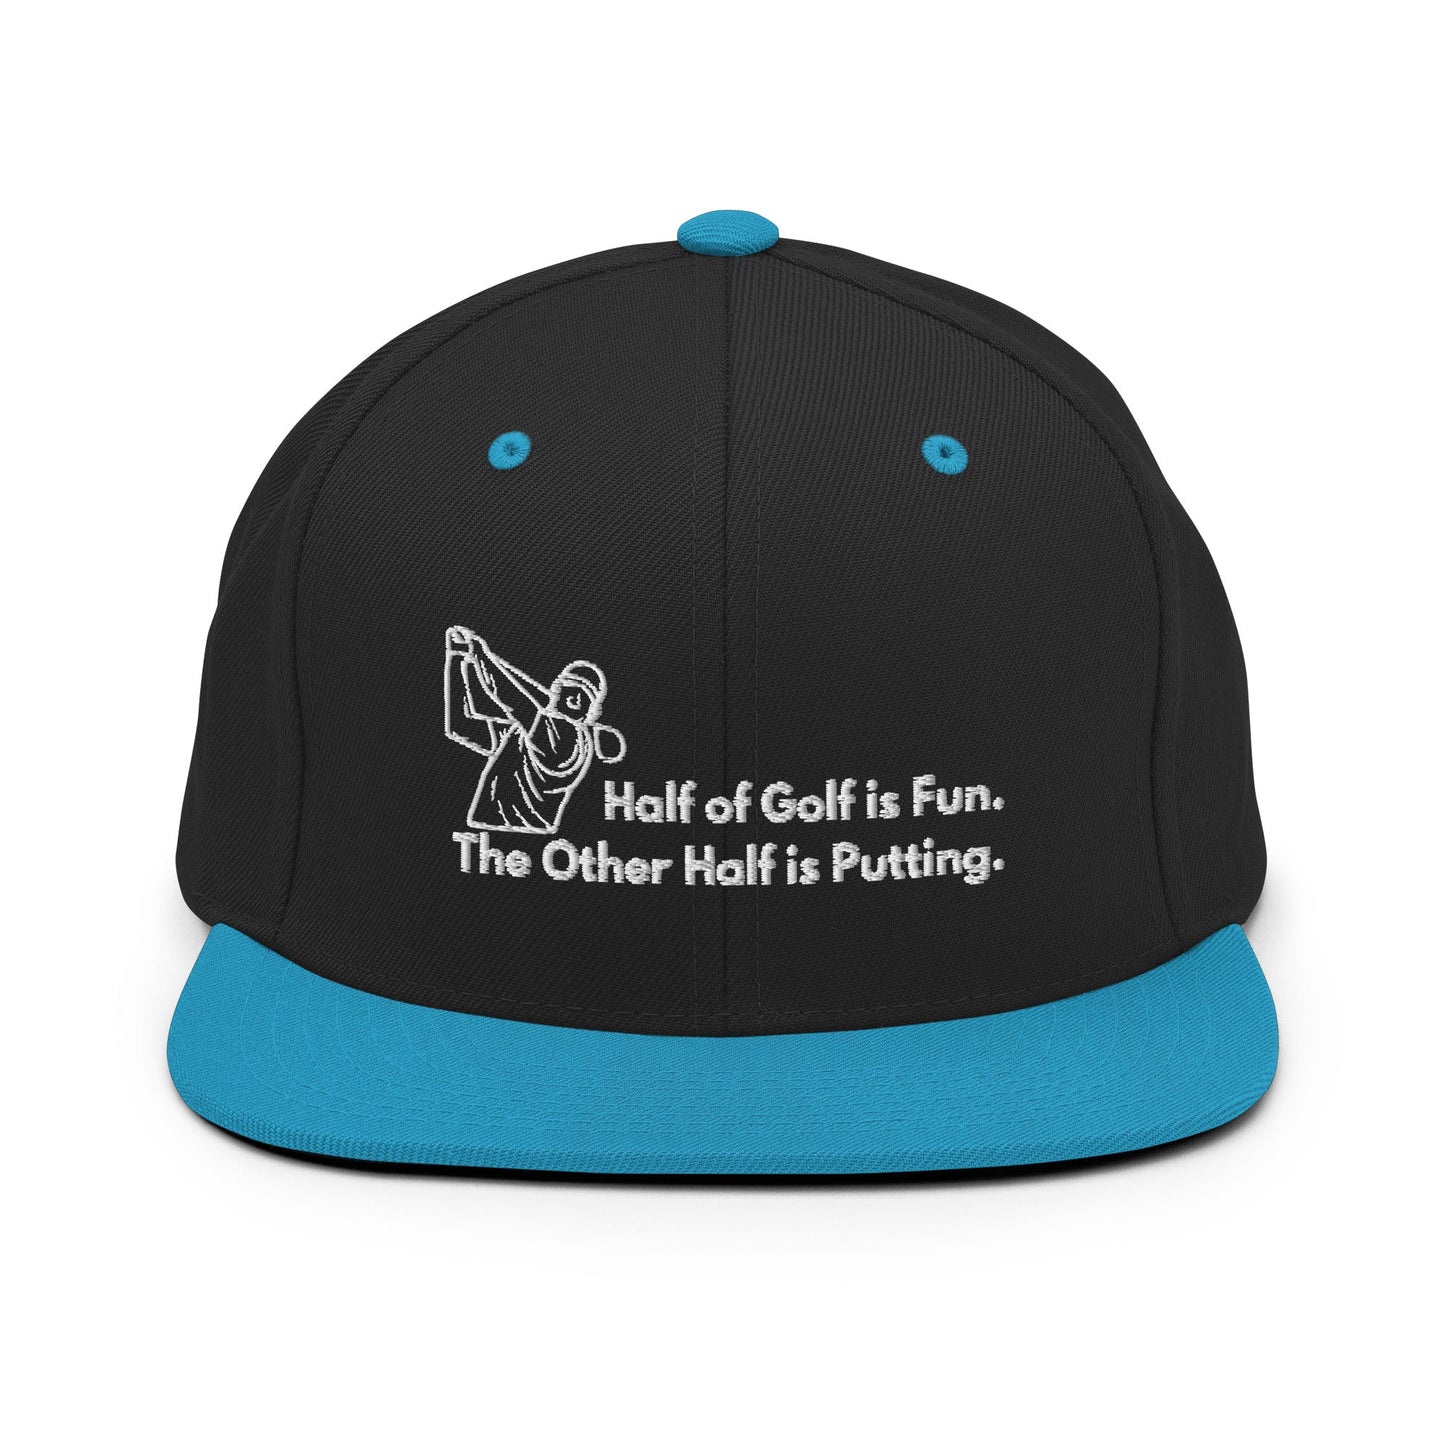 Funny Golfer Gifts  Snapback Hat Black/ Teal Half of Golf is Fun Snapback Hat